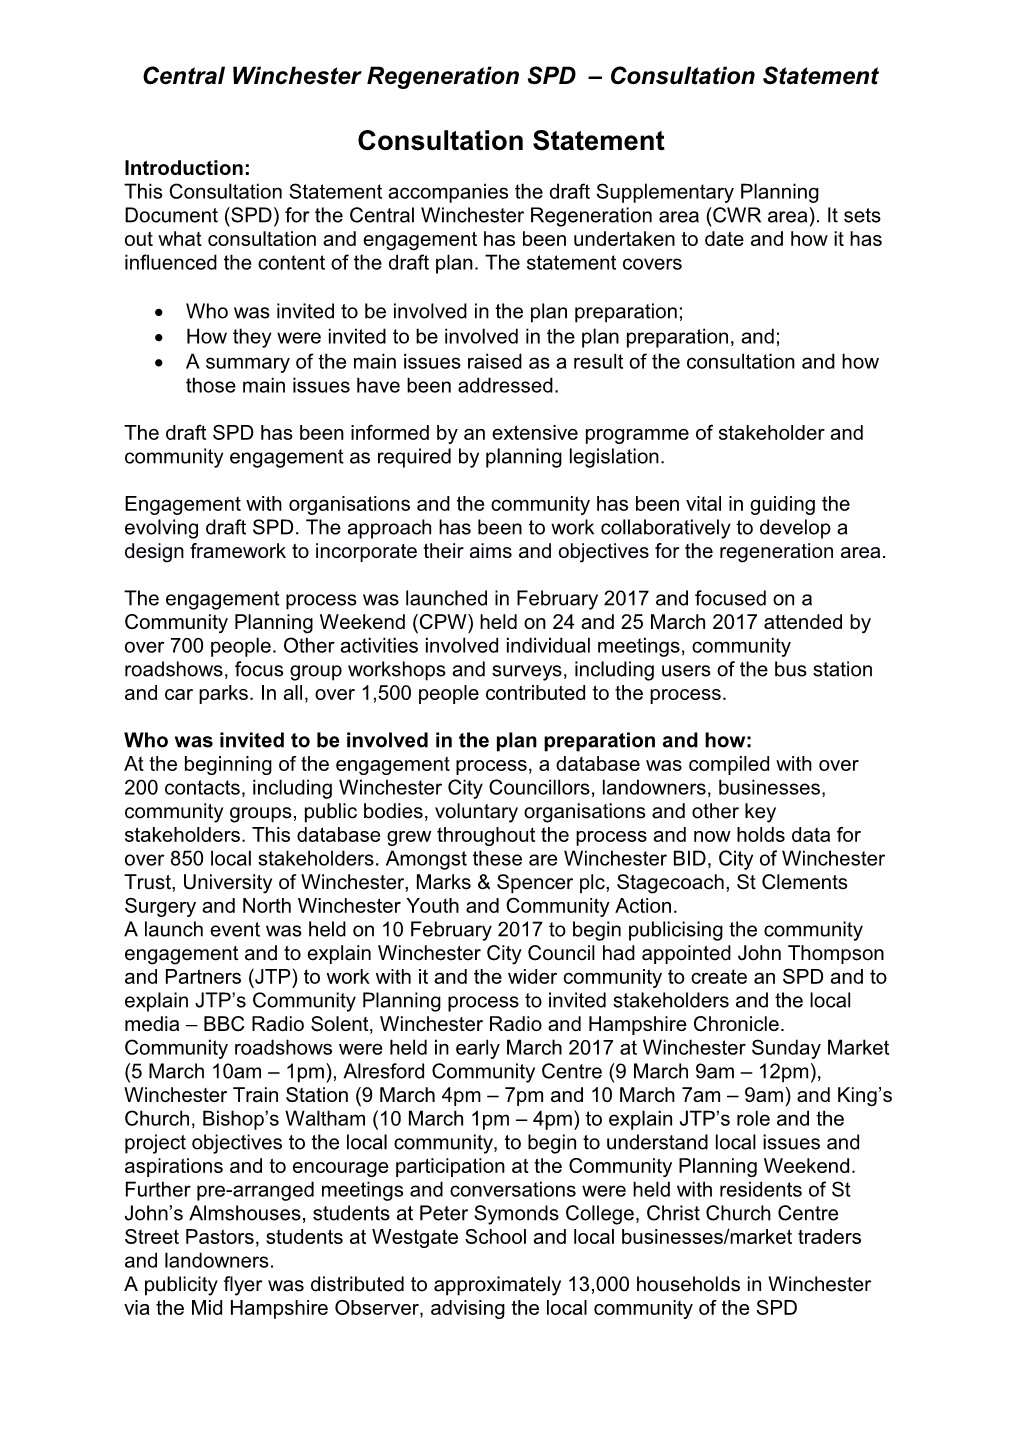 Central Winchester Regeneration SPD Consultation Statement